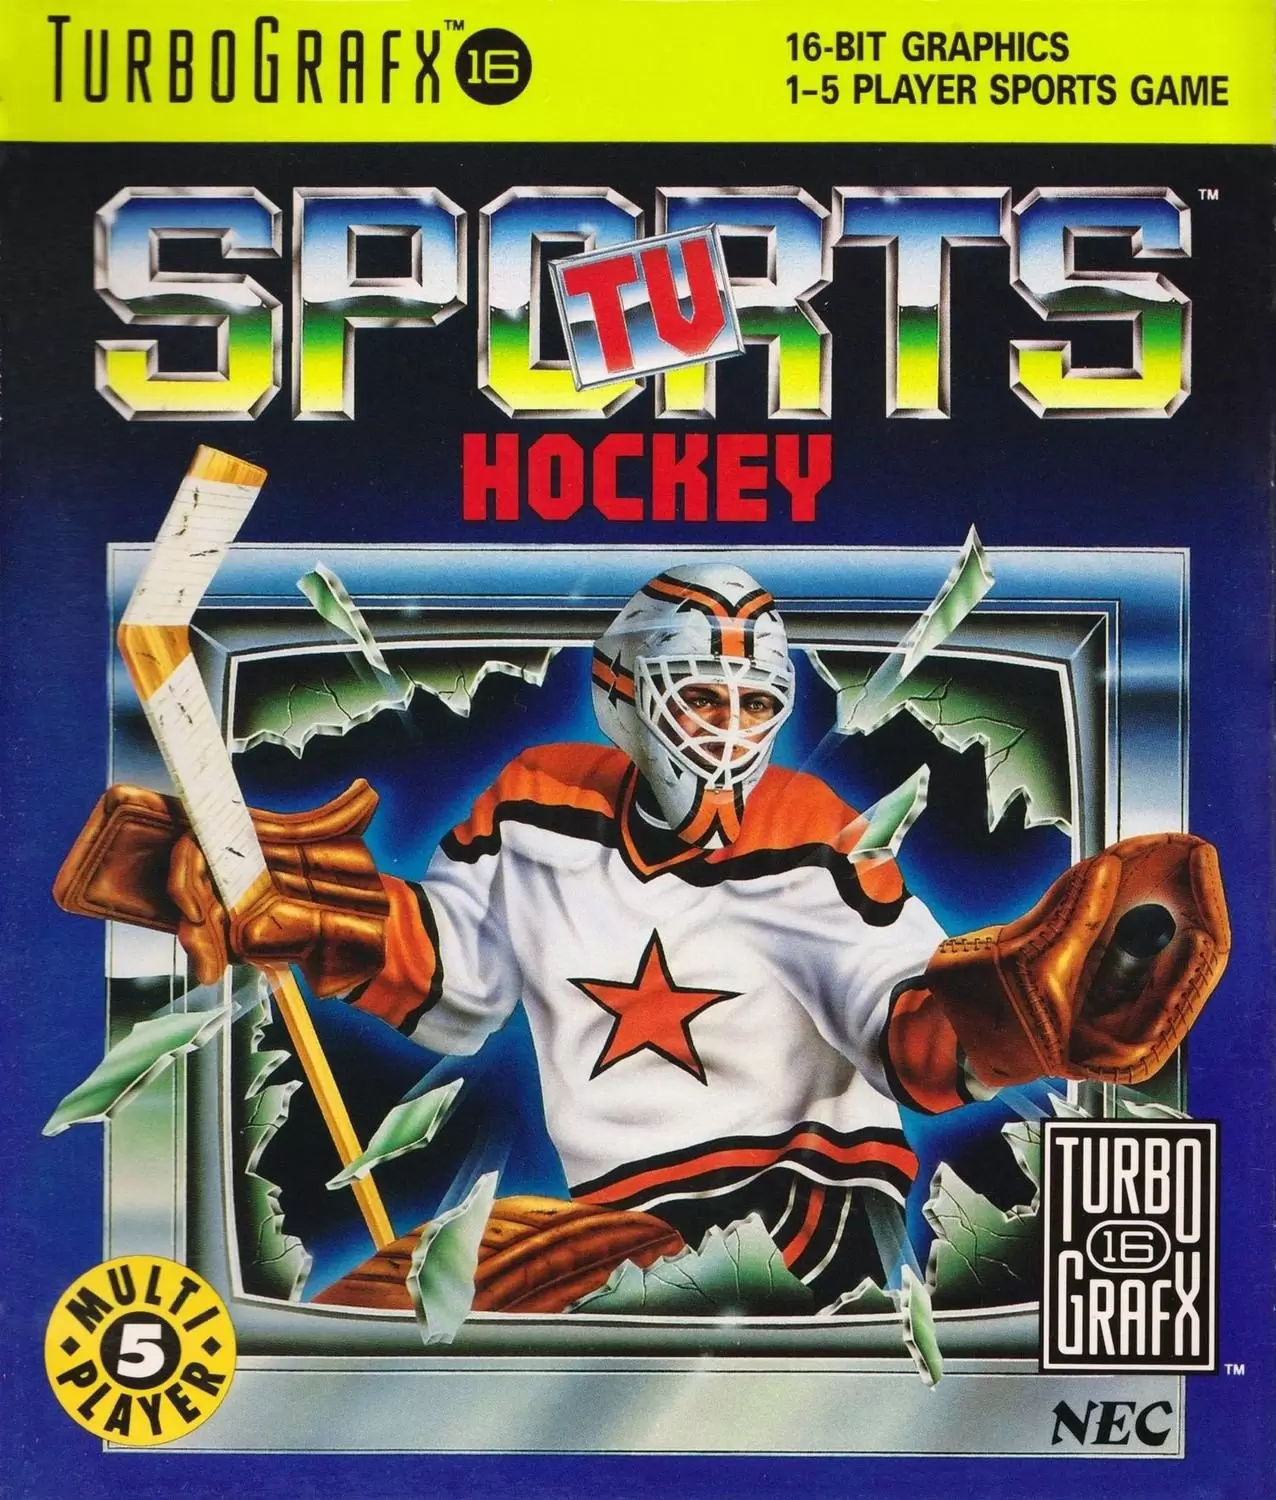 Turbo Grafx 16 (PC Engine) - TV Sports Hockey